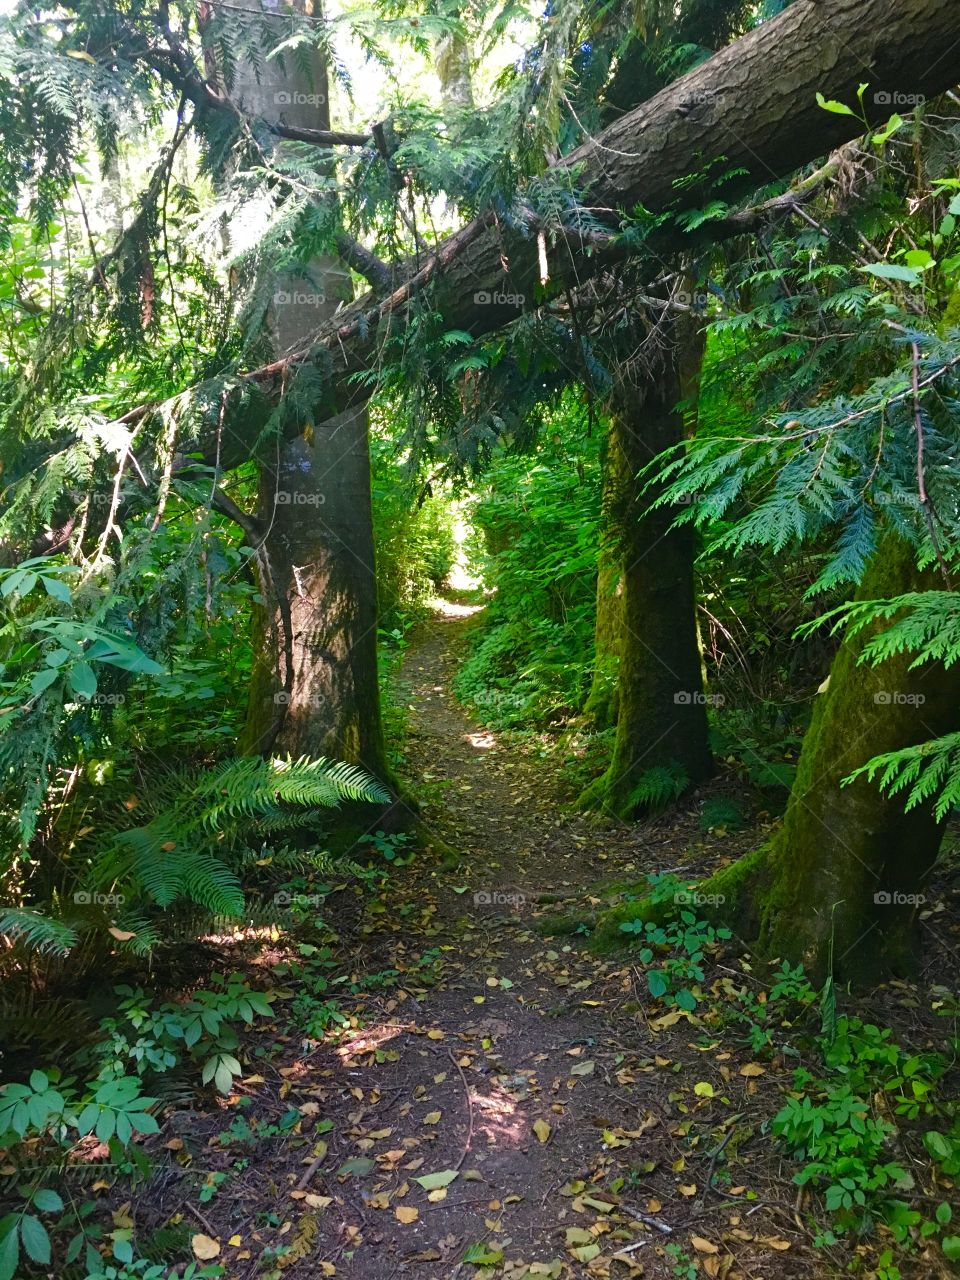 Hansville Greenway Trail, Kitsap Peninsula, Washington State